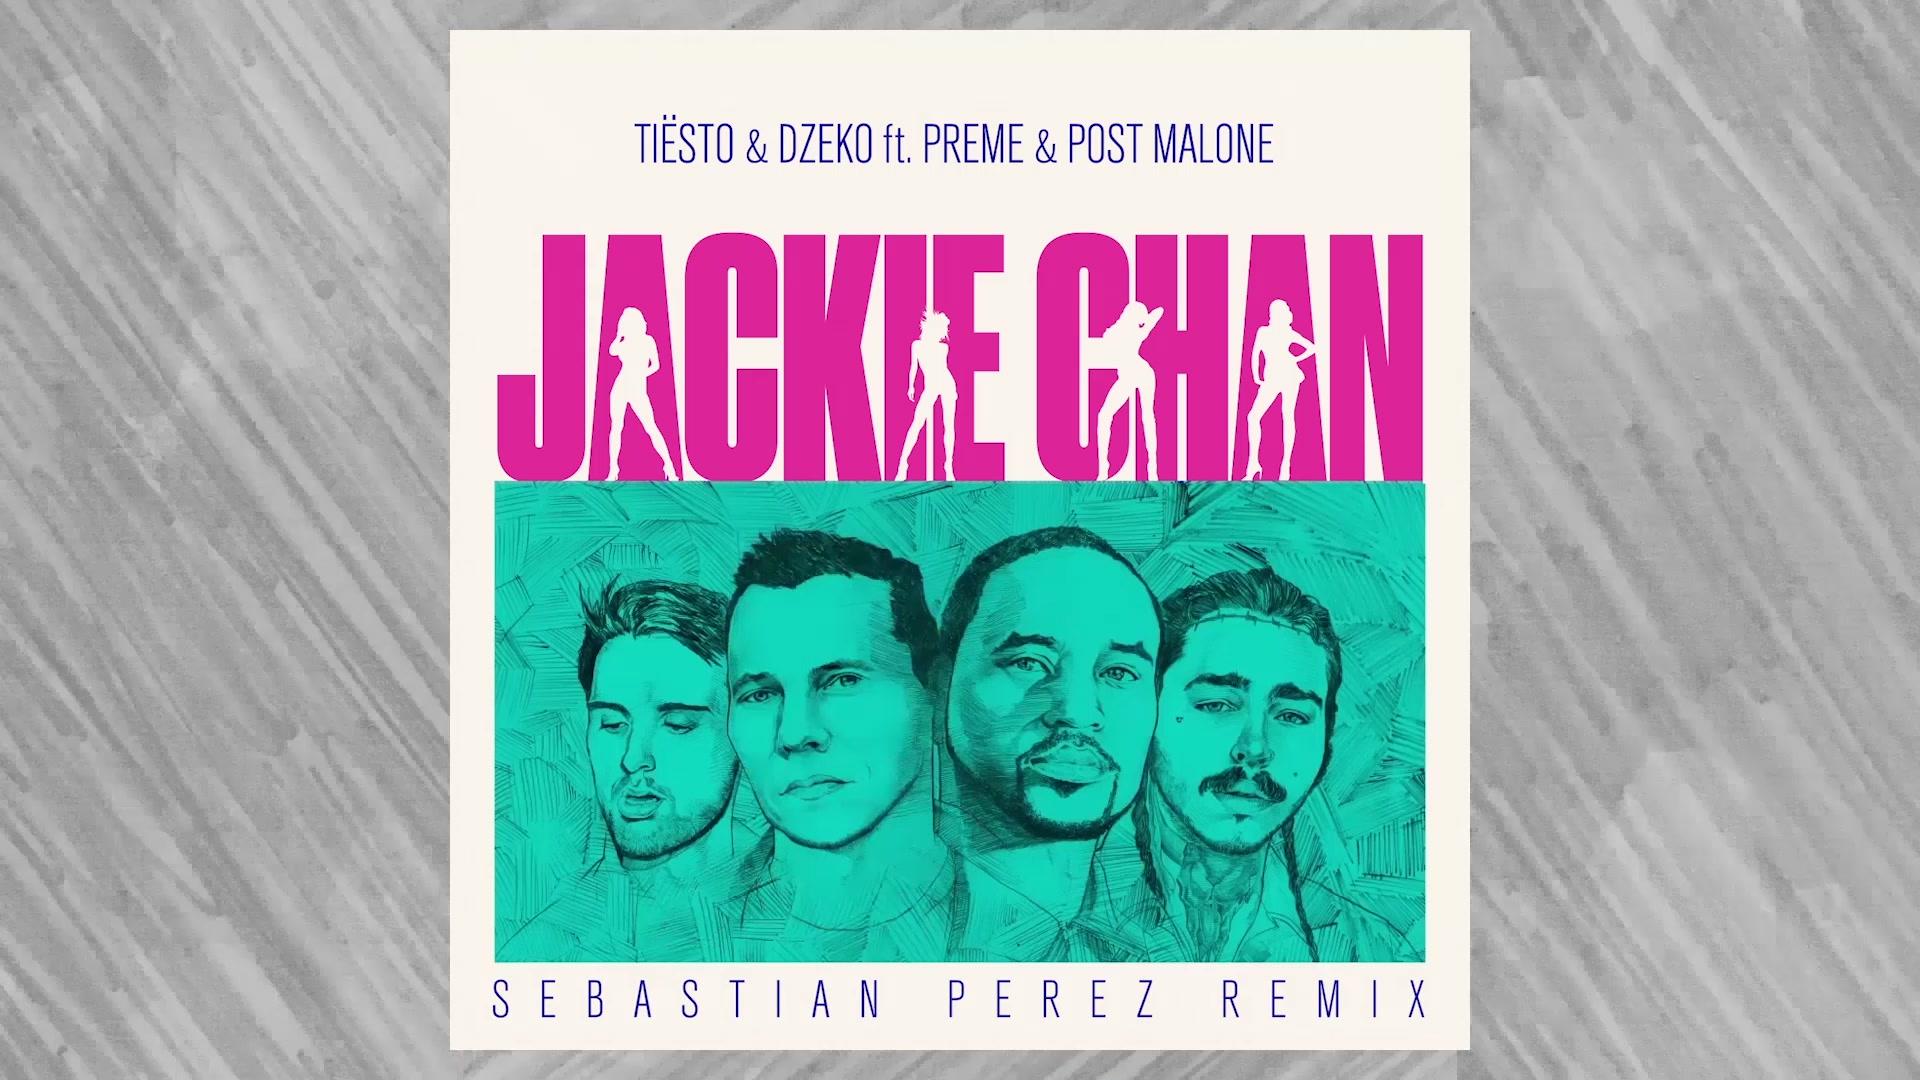 Tiësto - Jackie Chan (Sebastian Perez Remix / Audio)